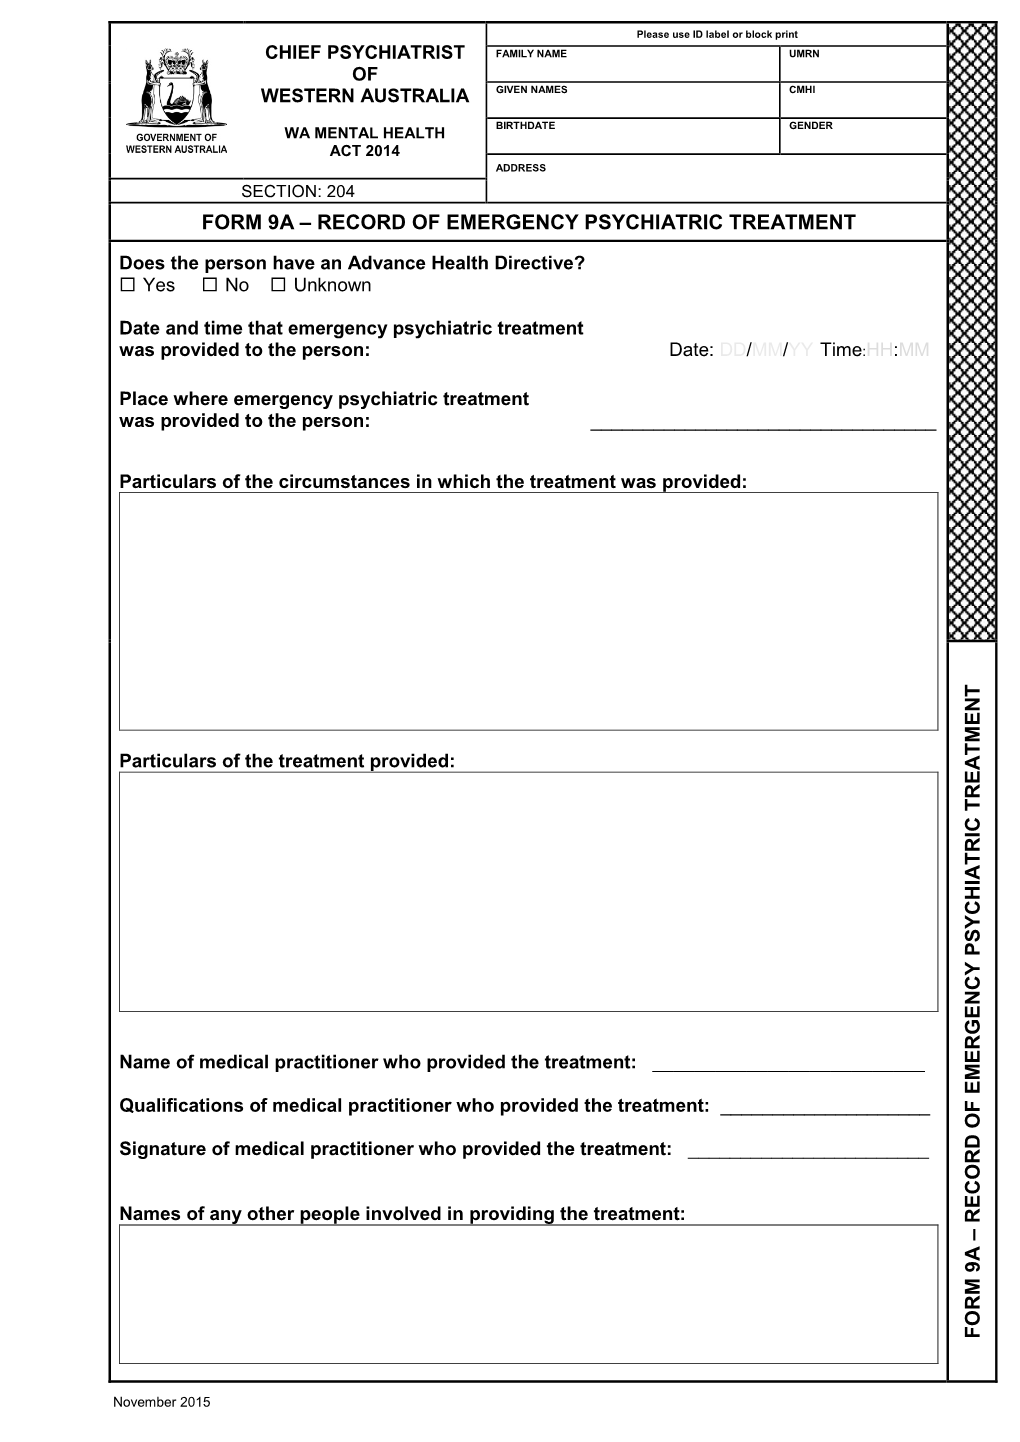 Record of Emergency Psychiatric Treatment Form